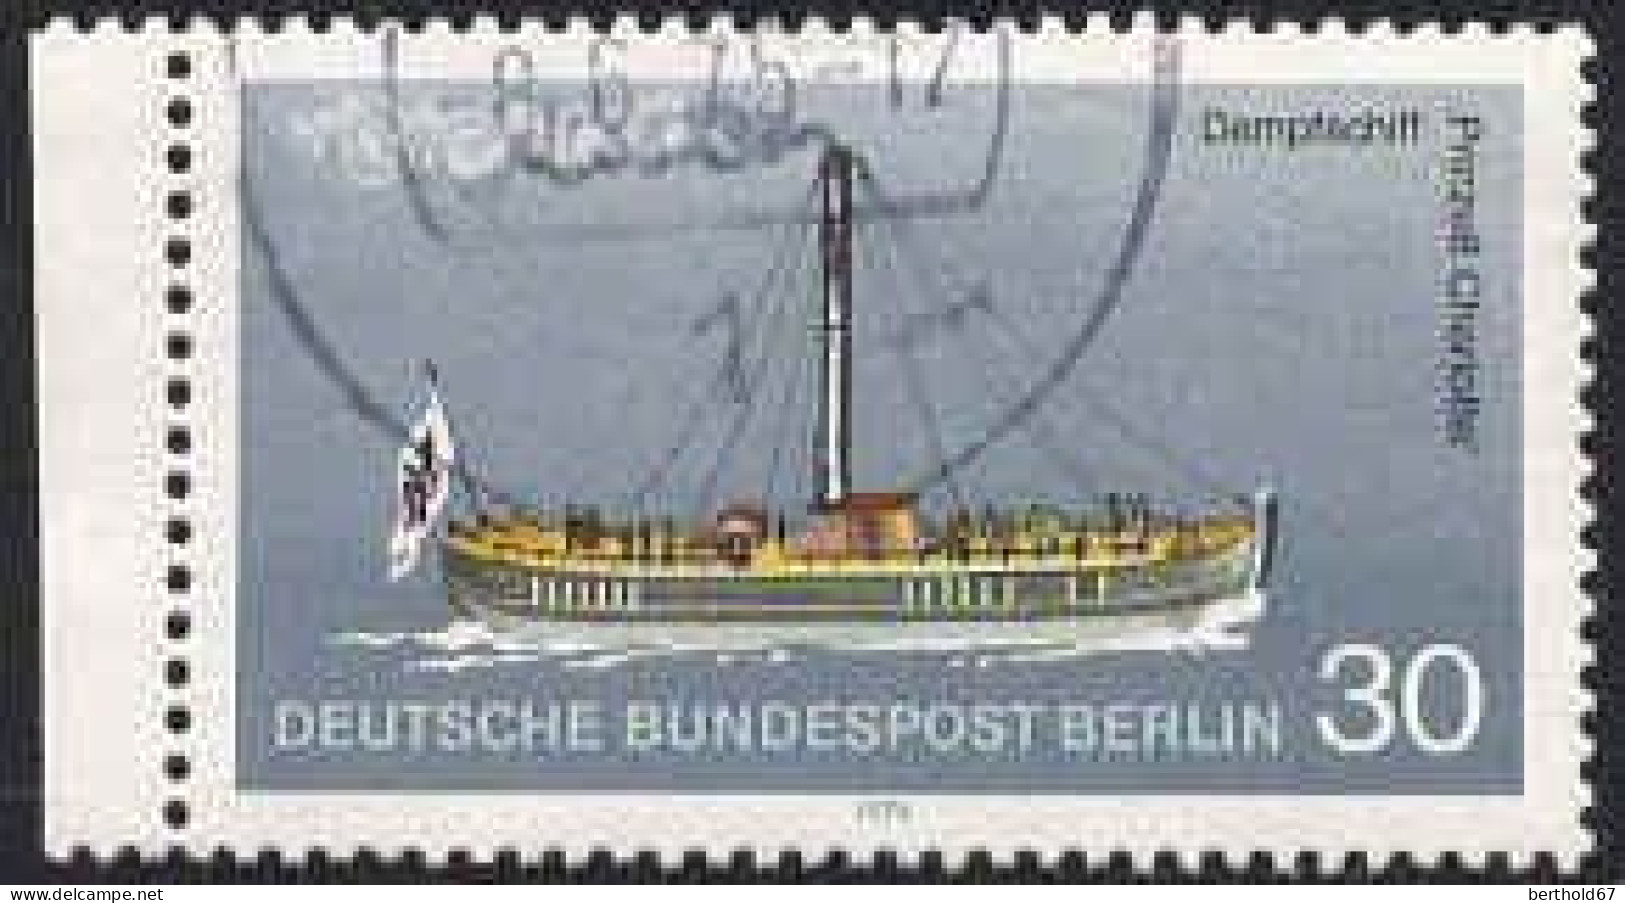 Berlin Poste Obl Yv:447 Mi:483 Dampfschiff Prinzeß Charlotte (cachet Rond) - Used Stamps